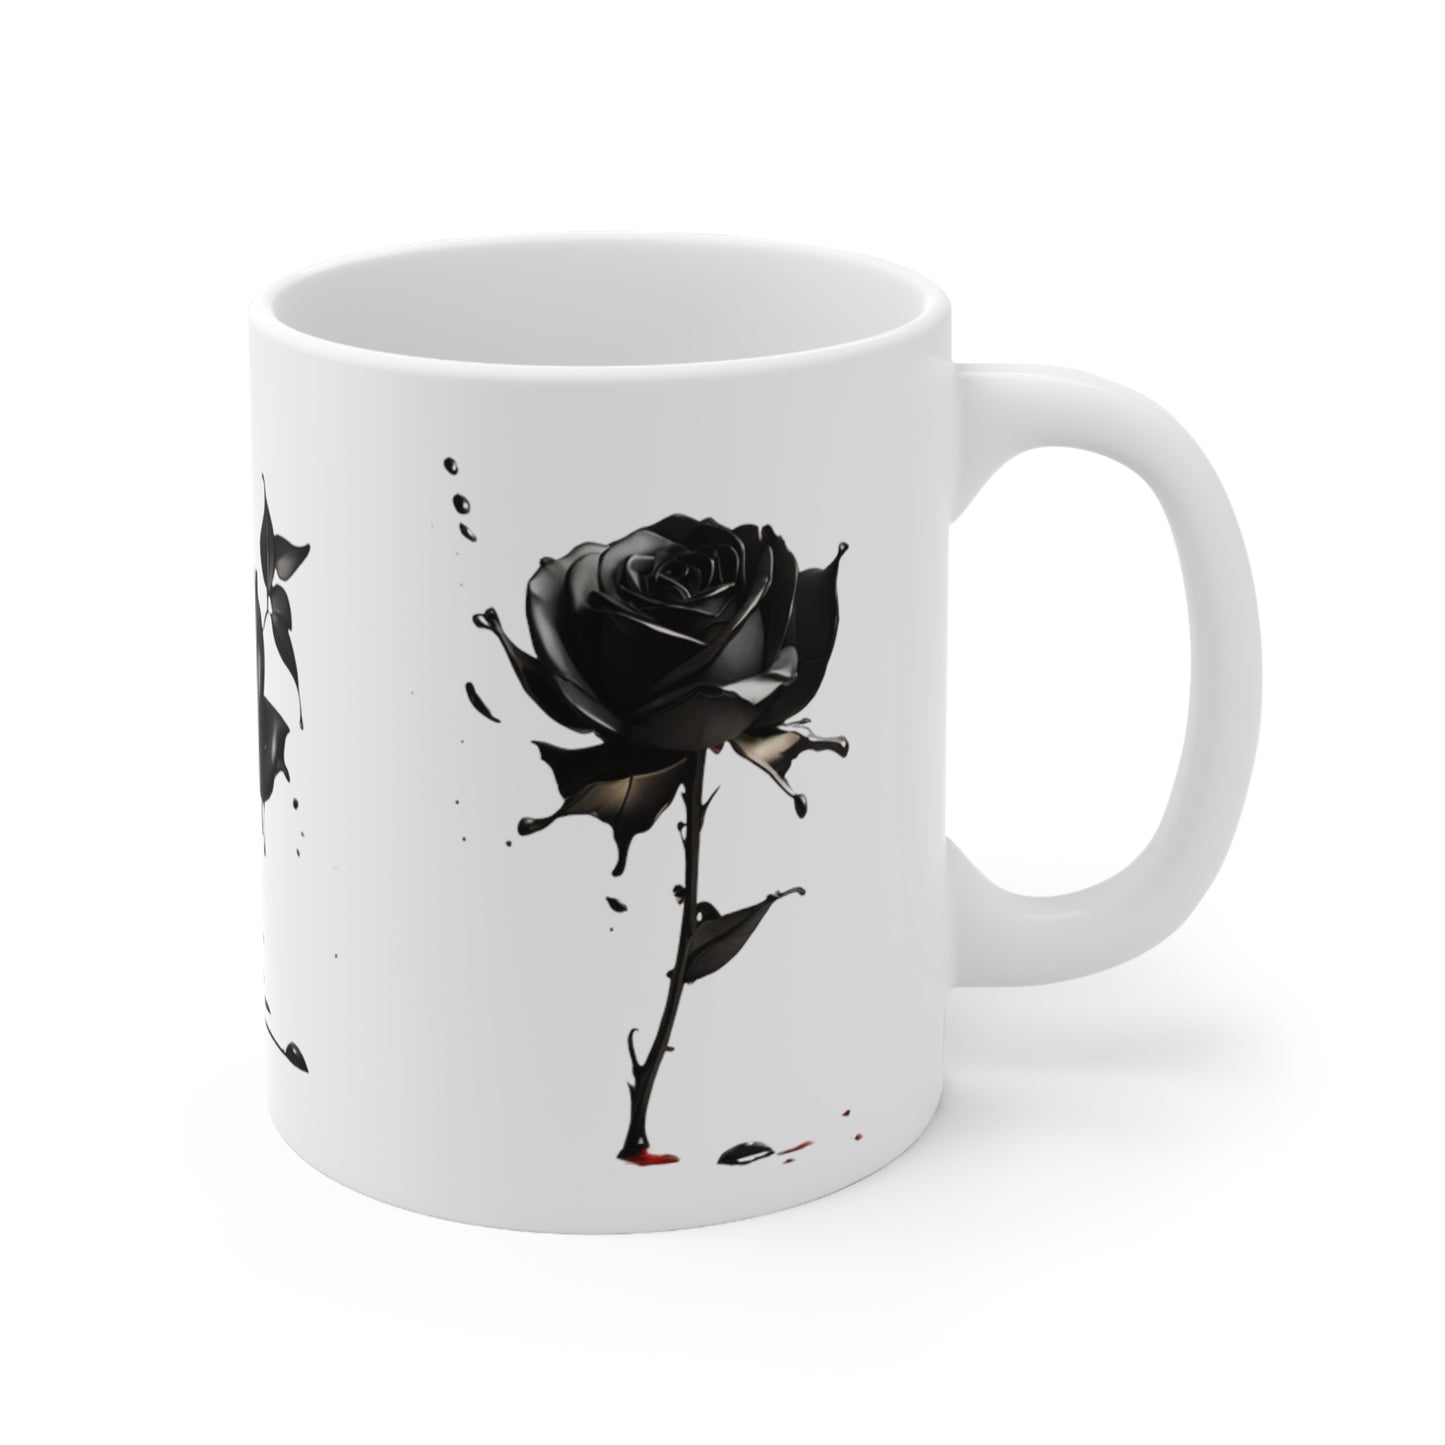 Splatter Black Rose Mug - Ceramic Coffee Mug 11oz